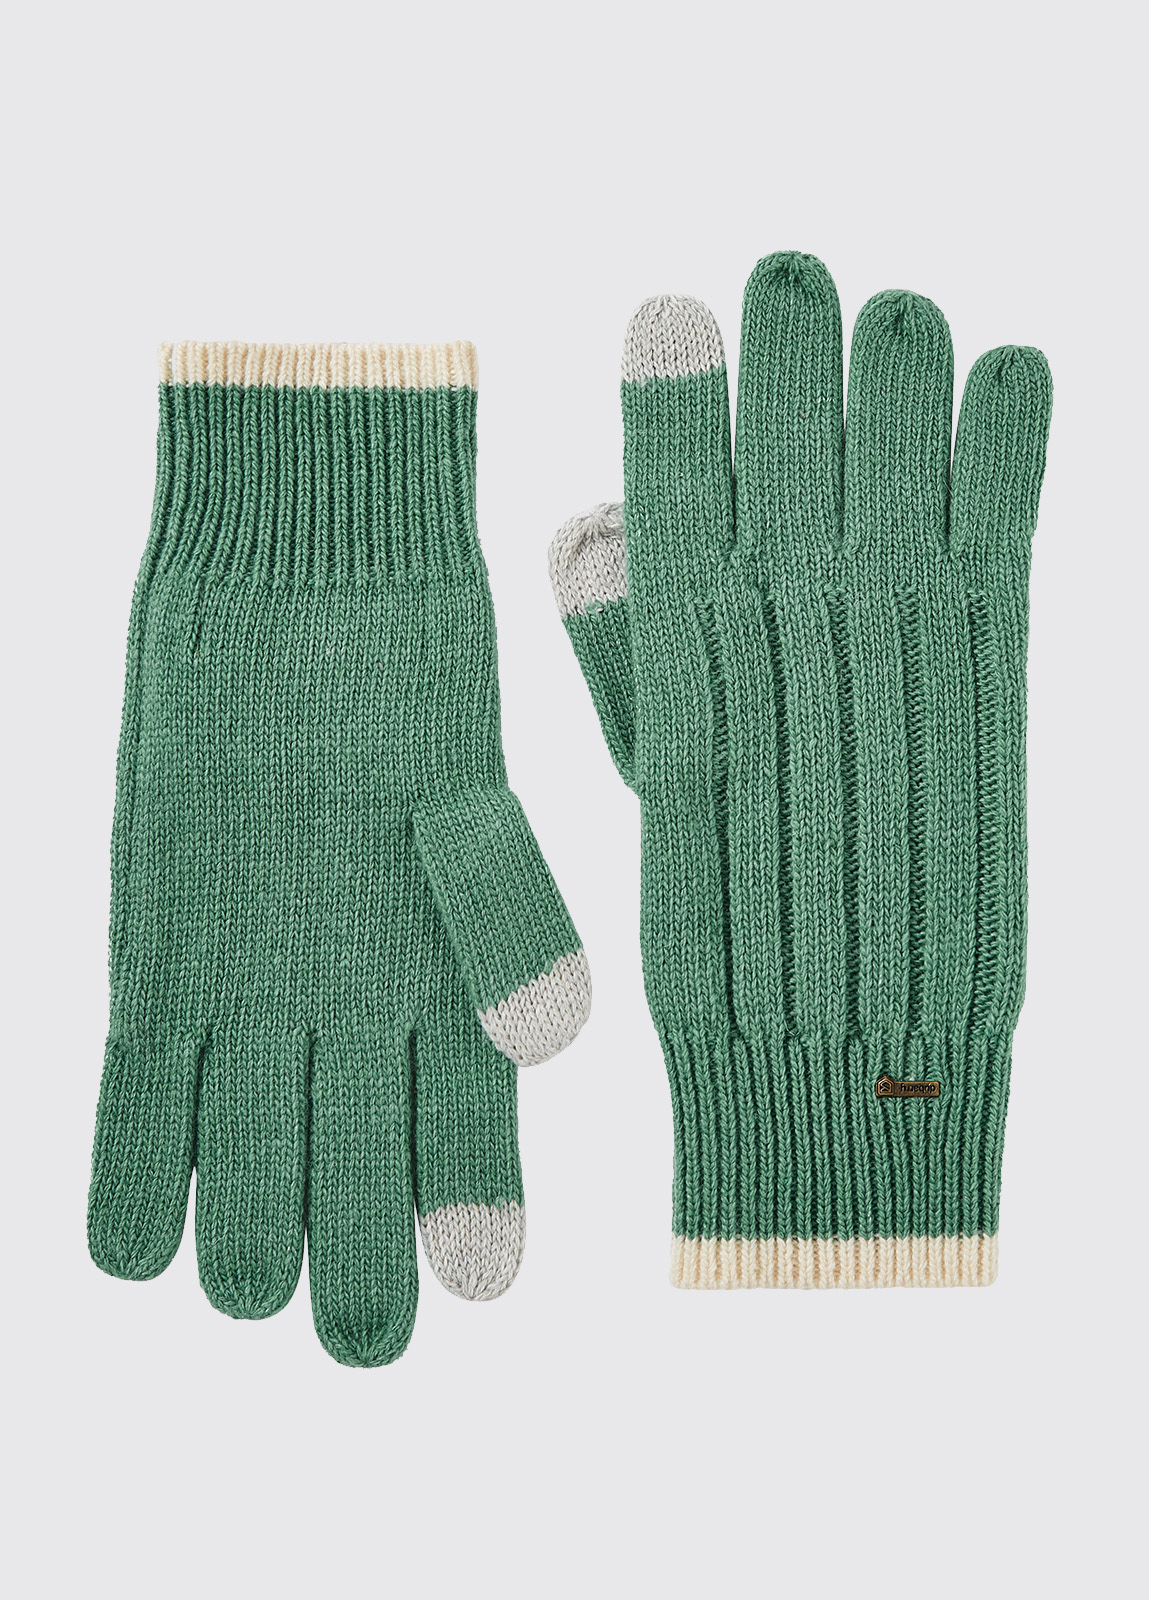 Marsh Knitted Gloves - Crab - Size Medium